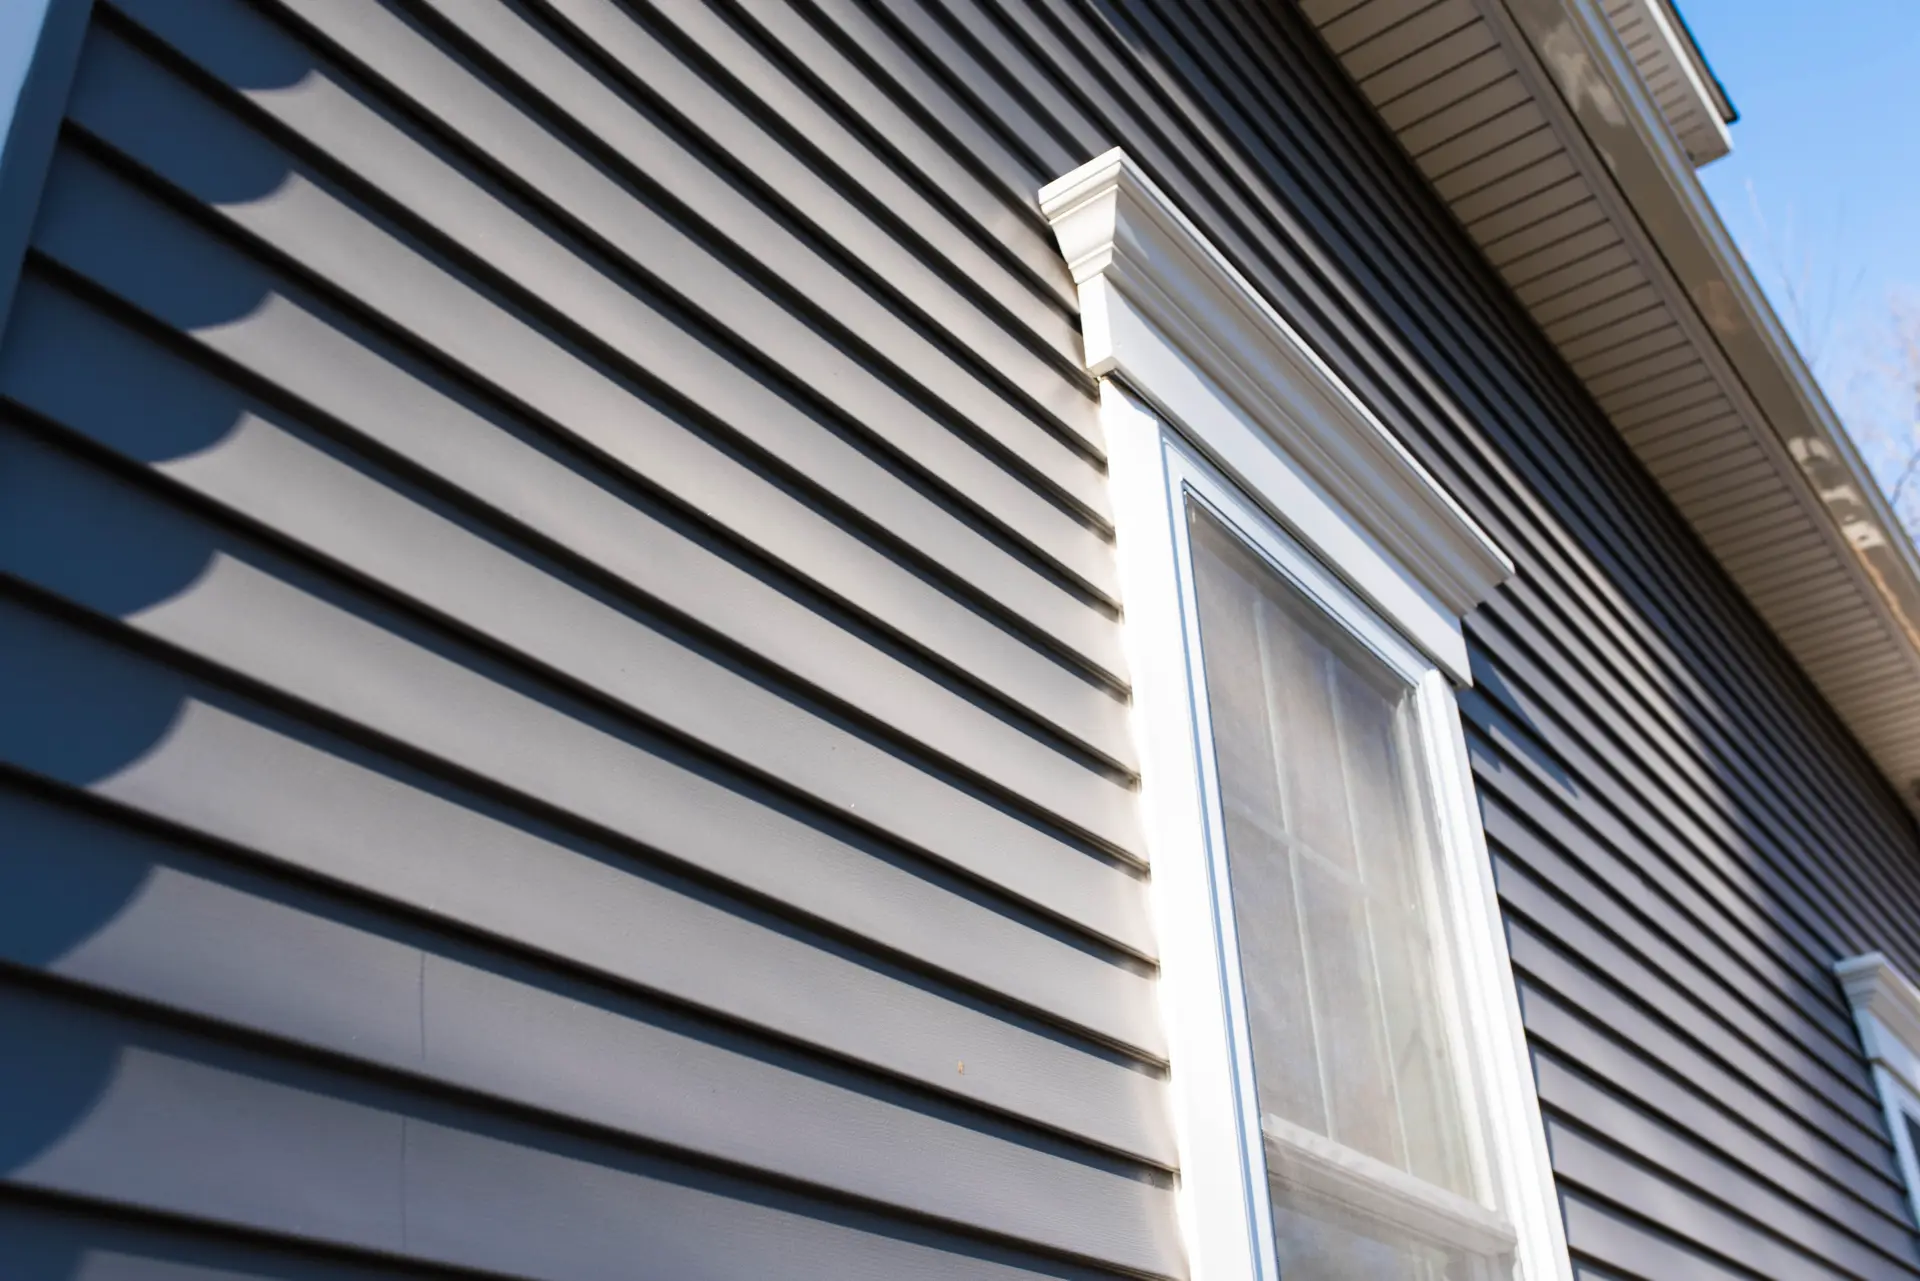 Gray Siding On House With Windows Facing Sky